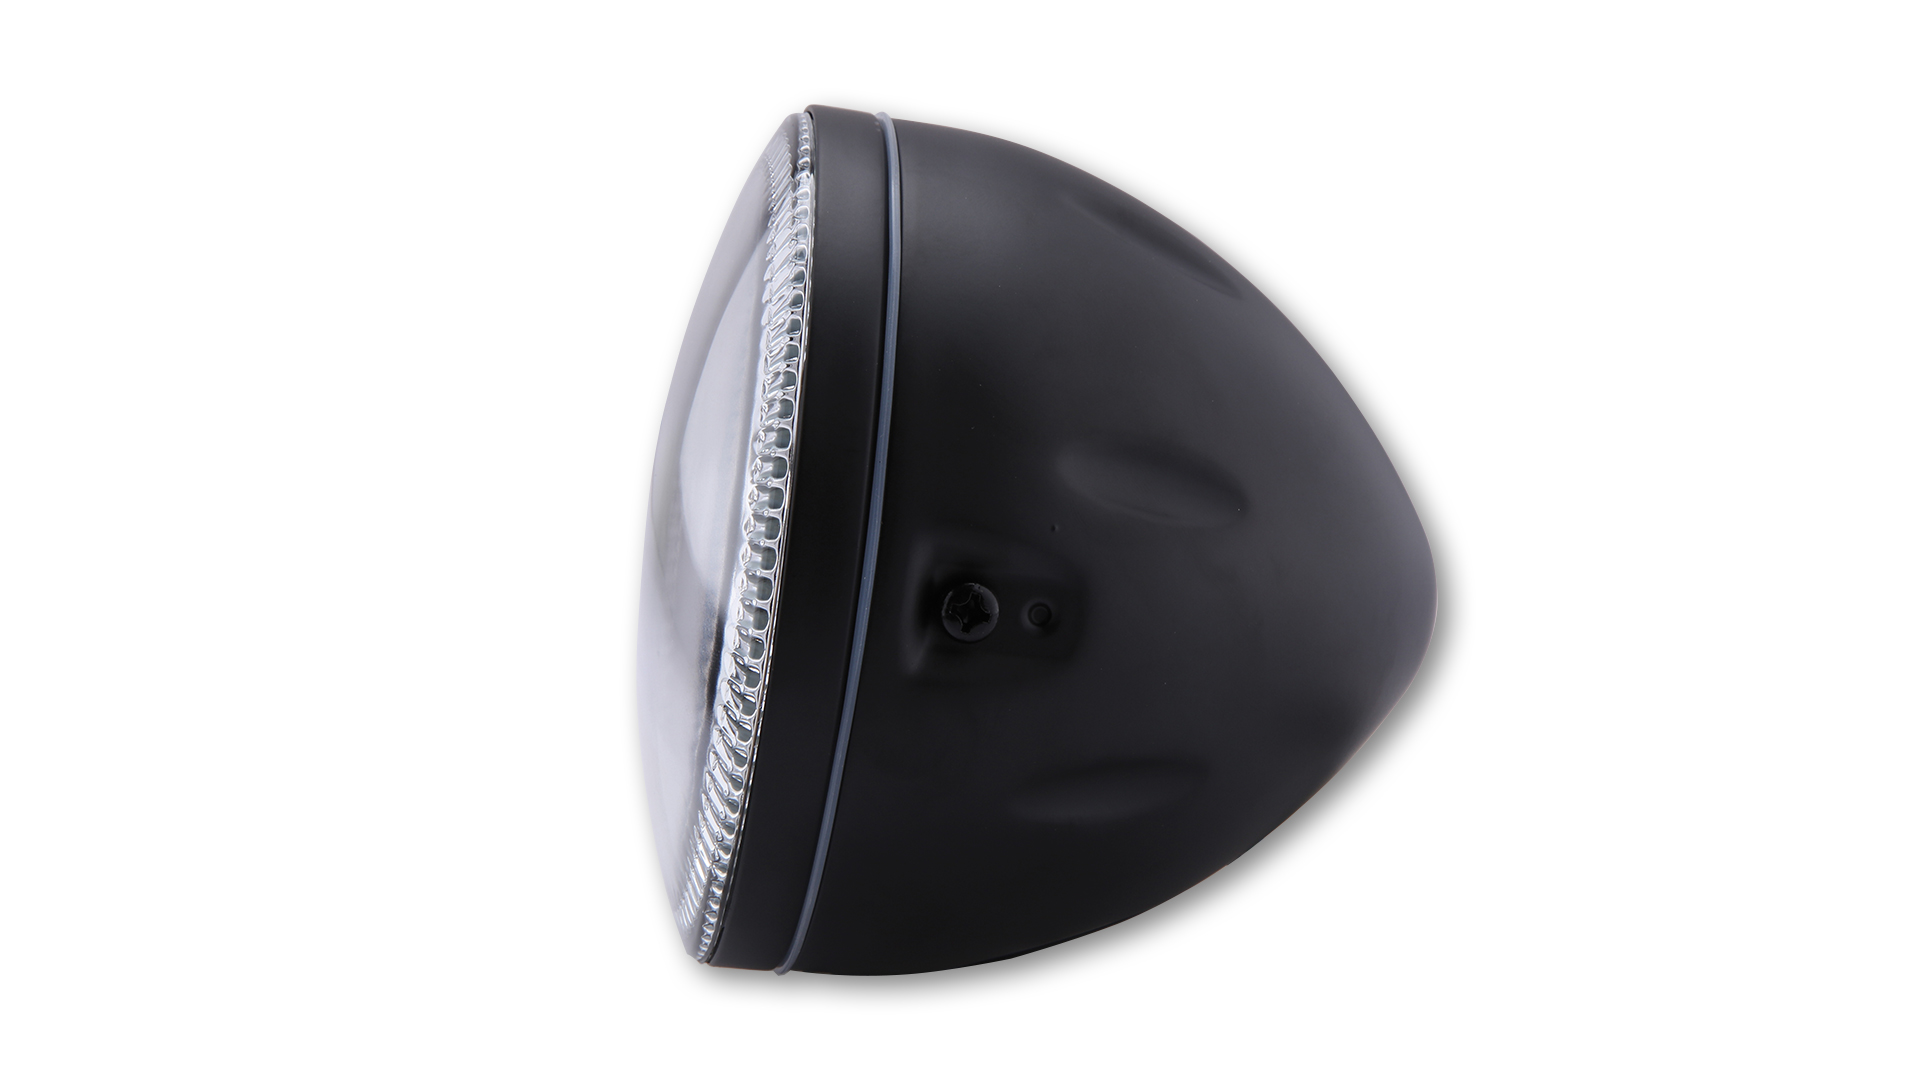 HIGHSIDER Faro principal de 5 3/4 pulgadas SKYLINE con anillo de luz de estacionamiento LED, carcasa metálica negra, H4, 12V 60/55 W, montaje lateral, homologado E.